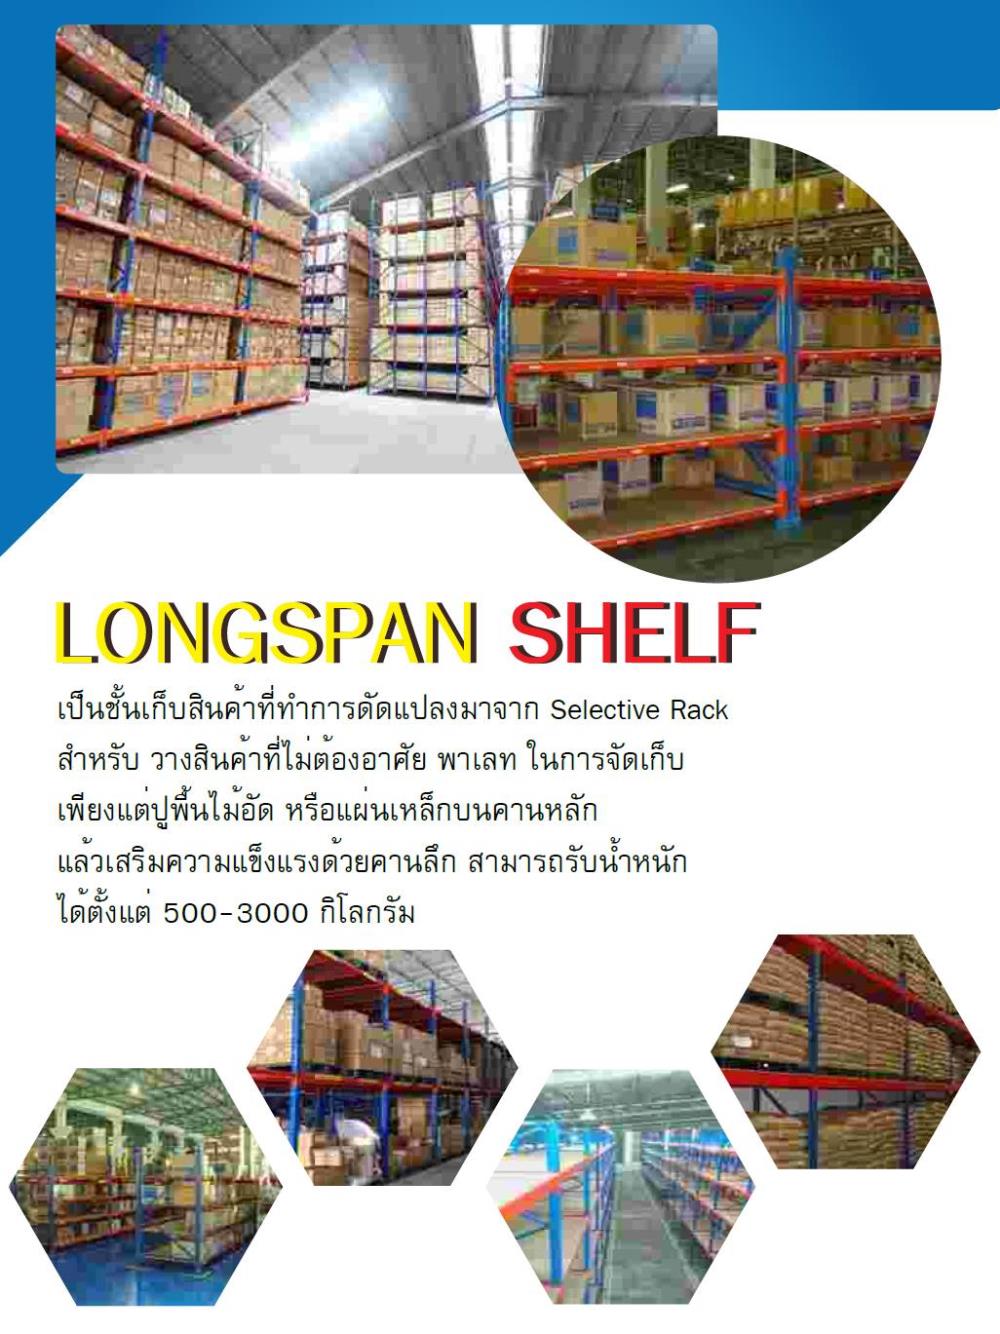 LONGSPAN SHELF,#LongSpanShelf #LongSpan #LongShelf #Shelf #ชั้นวาง #logistic #โลจิสติก #warehouse #โรงงาน #คลังสินค้า,,Materials Handling/Racks and Shelving